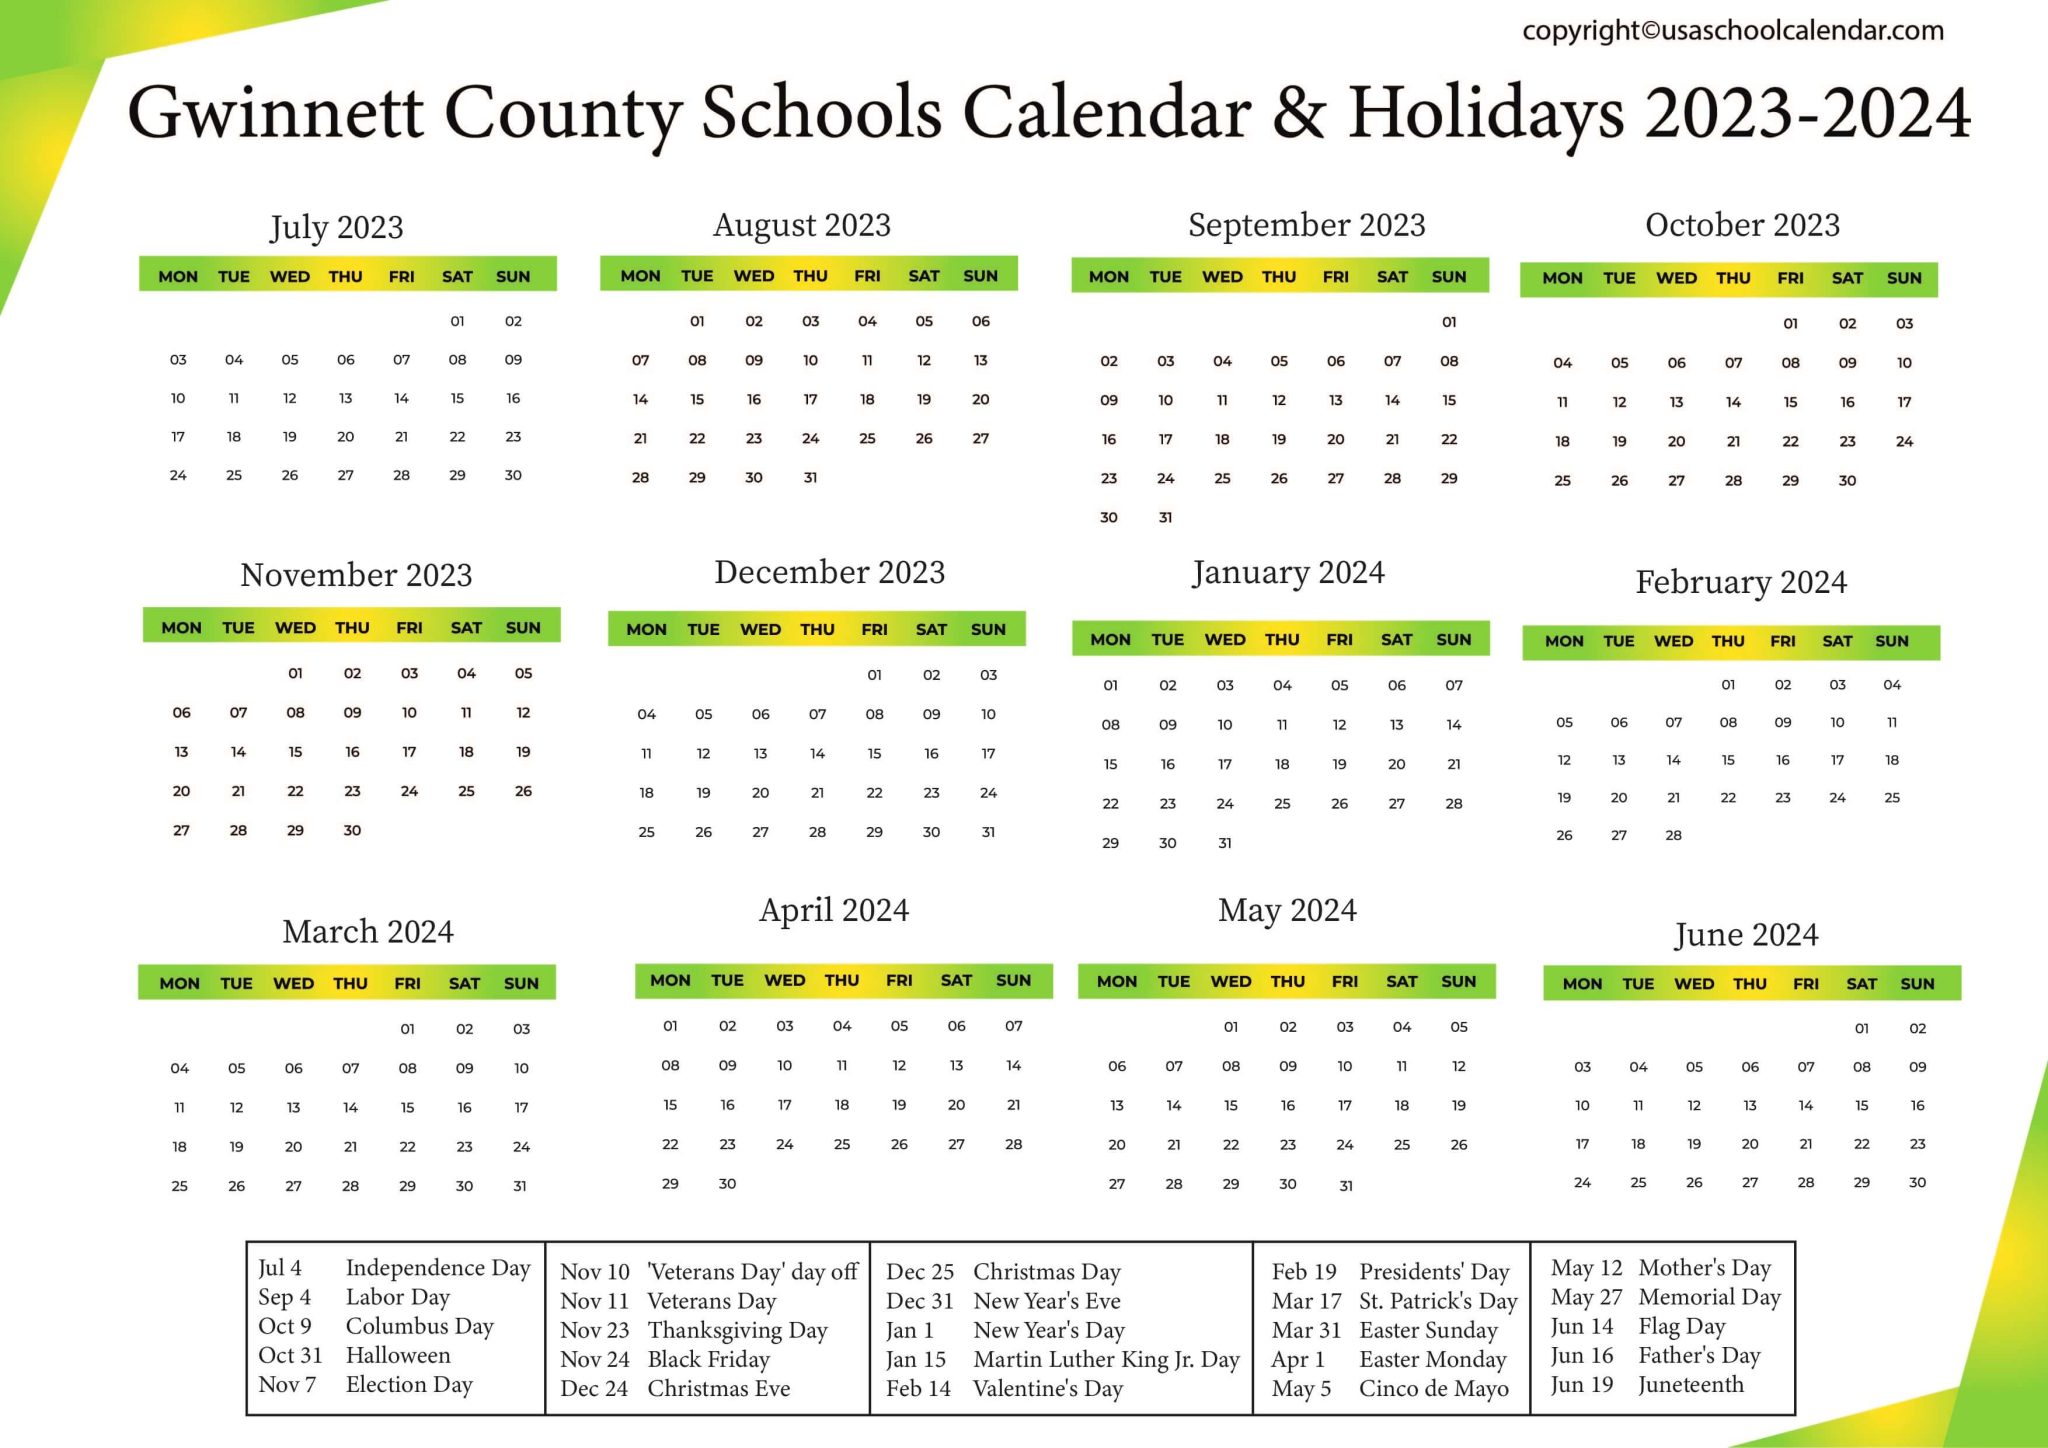 Gwinnett County Schools Calendar & Holidays 2023-2024